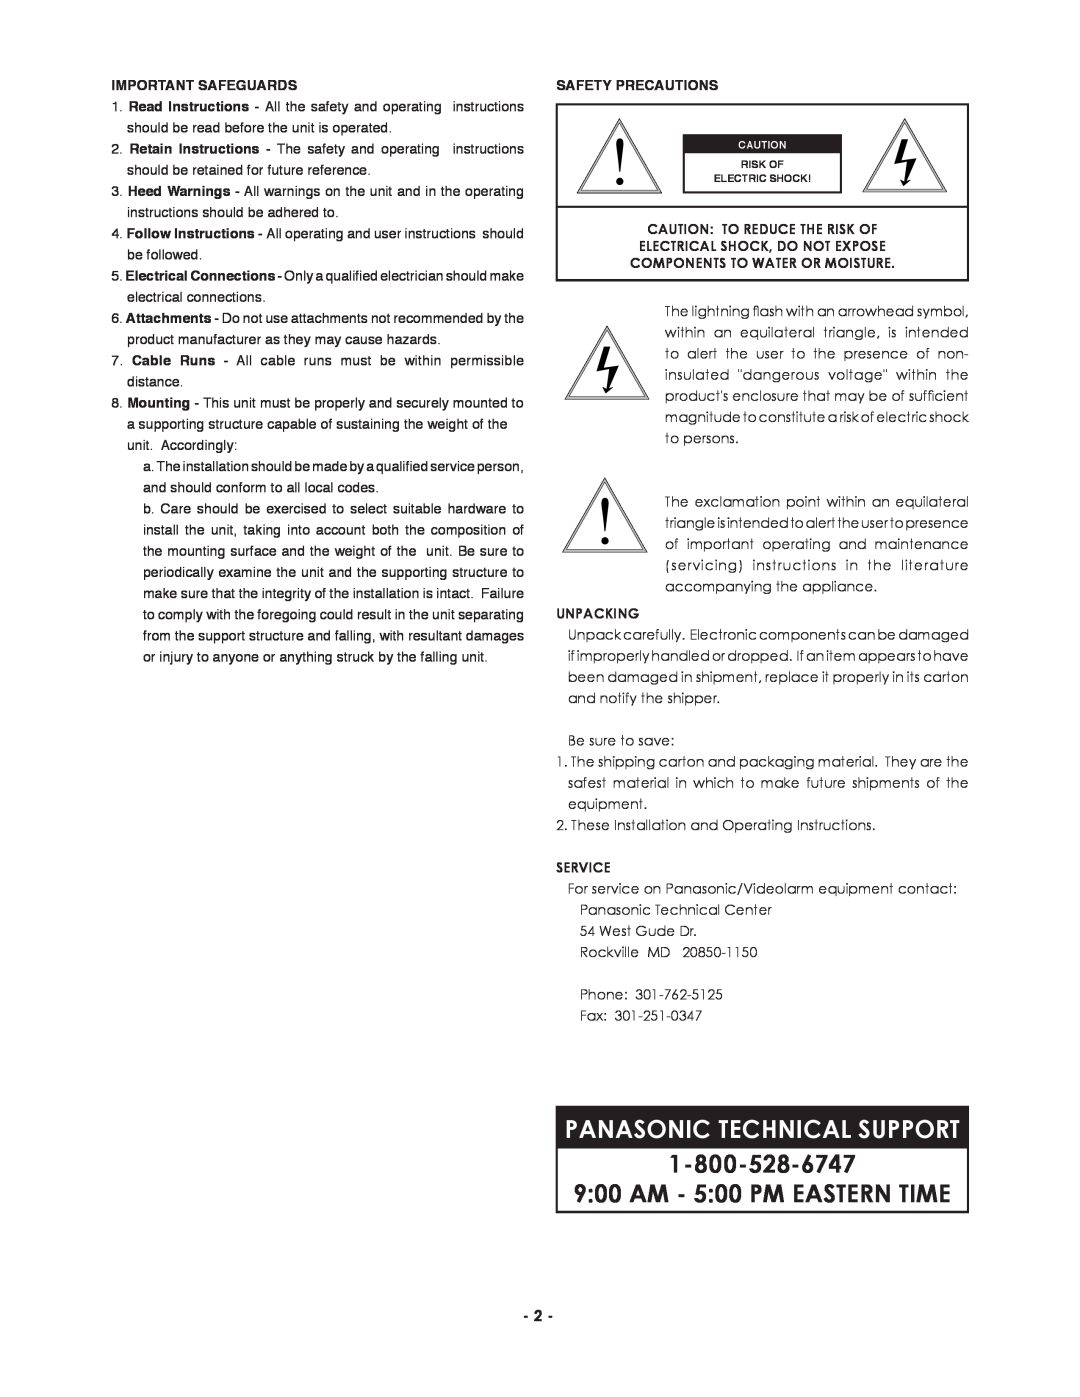 Panasonic Pod9cw, POD9CF(W) Panasonic Technical Support, Important Safeguards, Safety Precautions, Unpacking, Service 